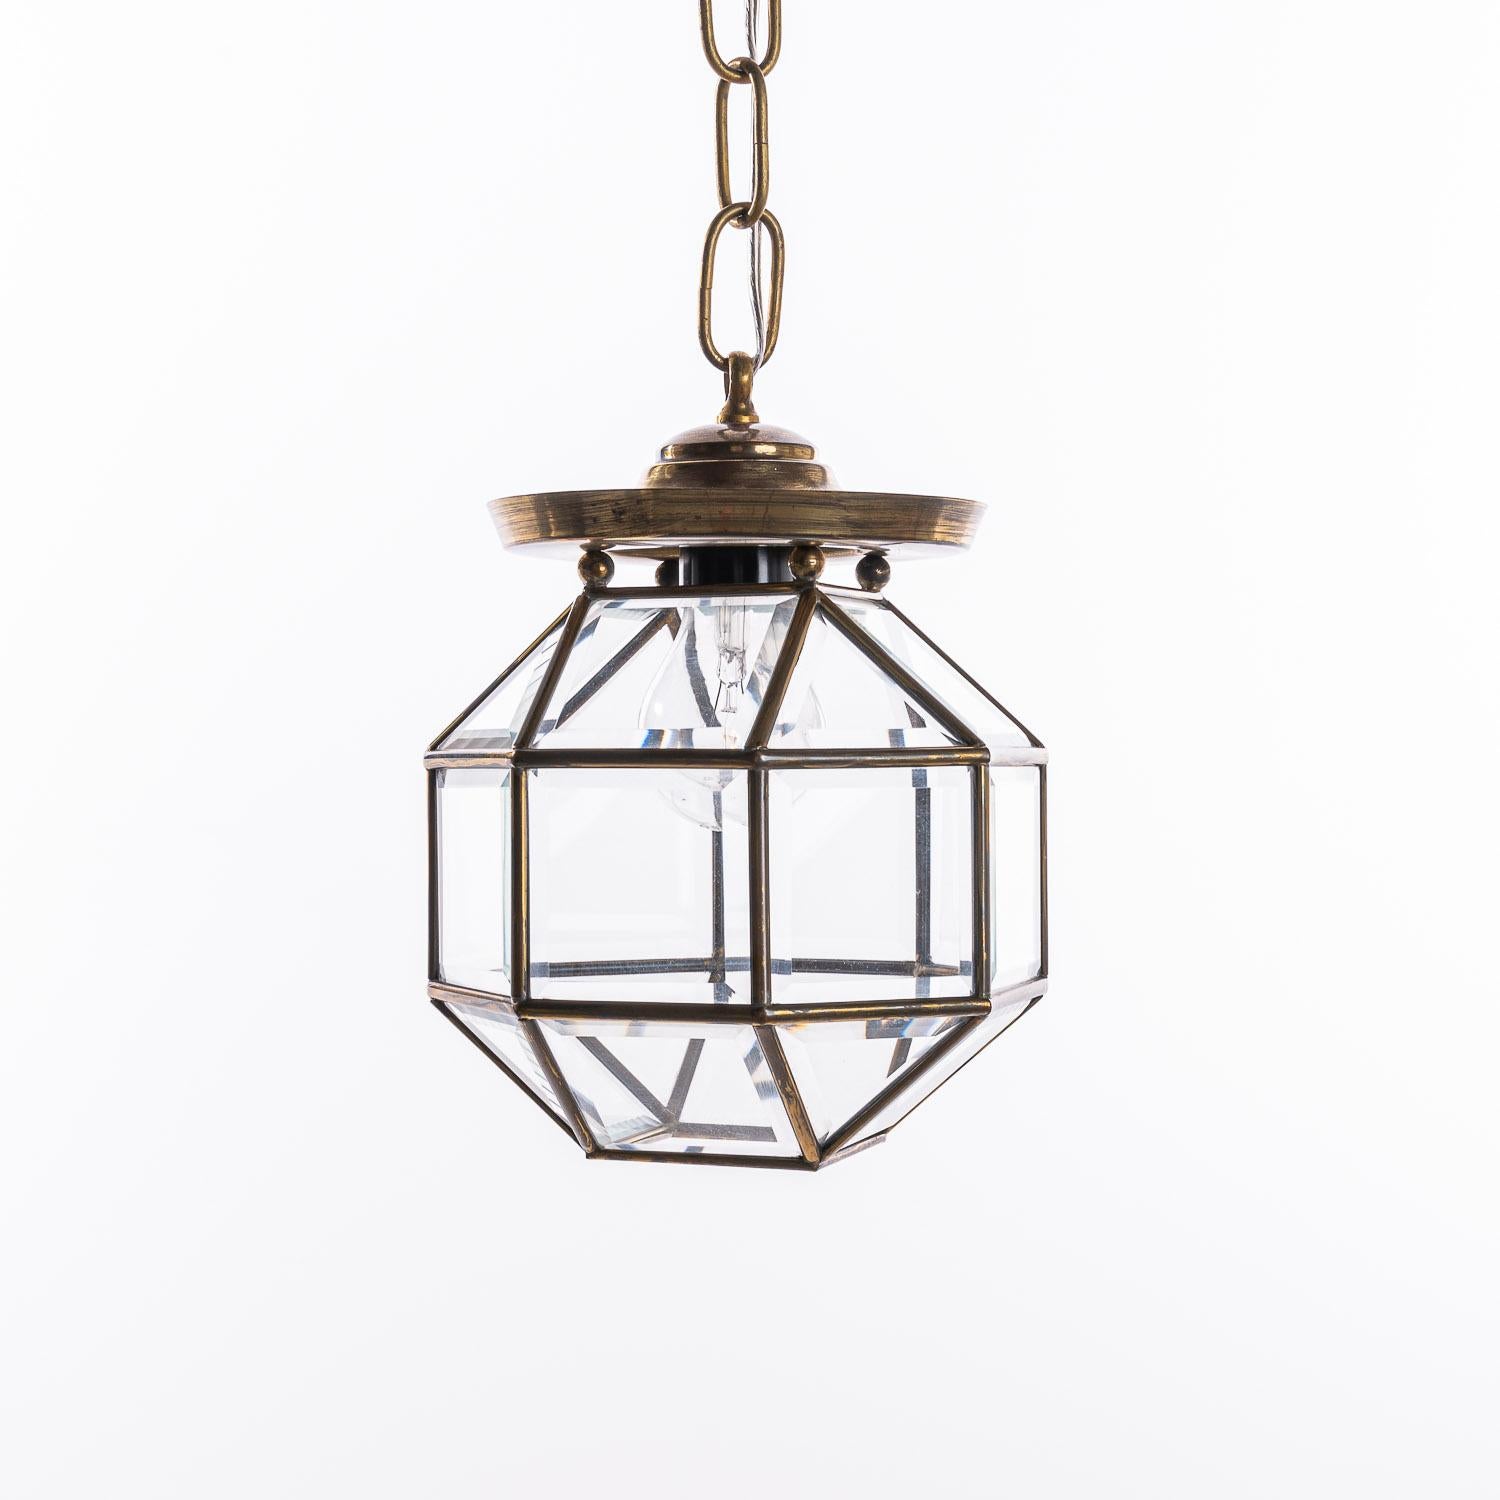 1900-1920 Brass & Glass Amsterdam School Lantern For Sale 3